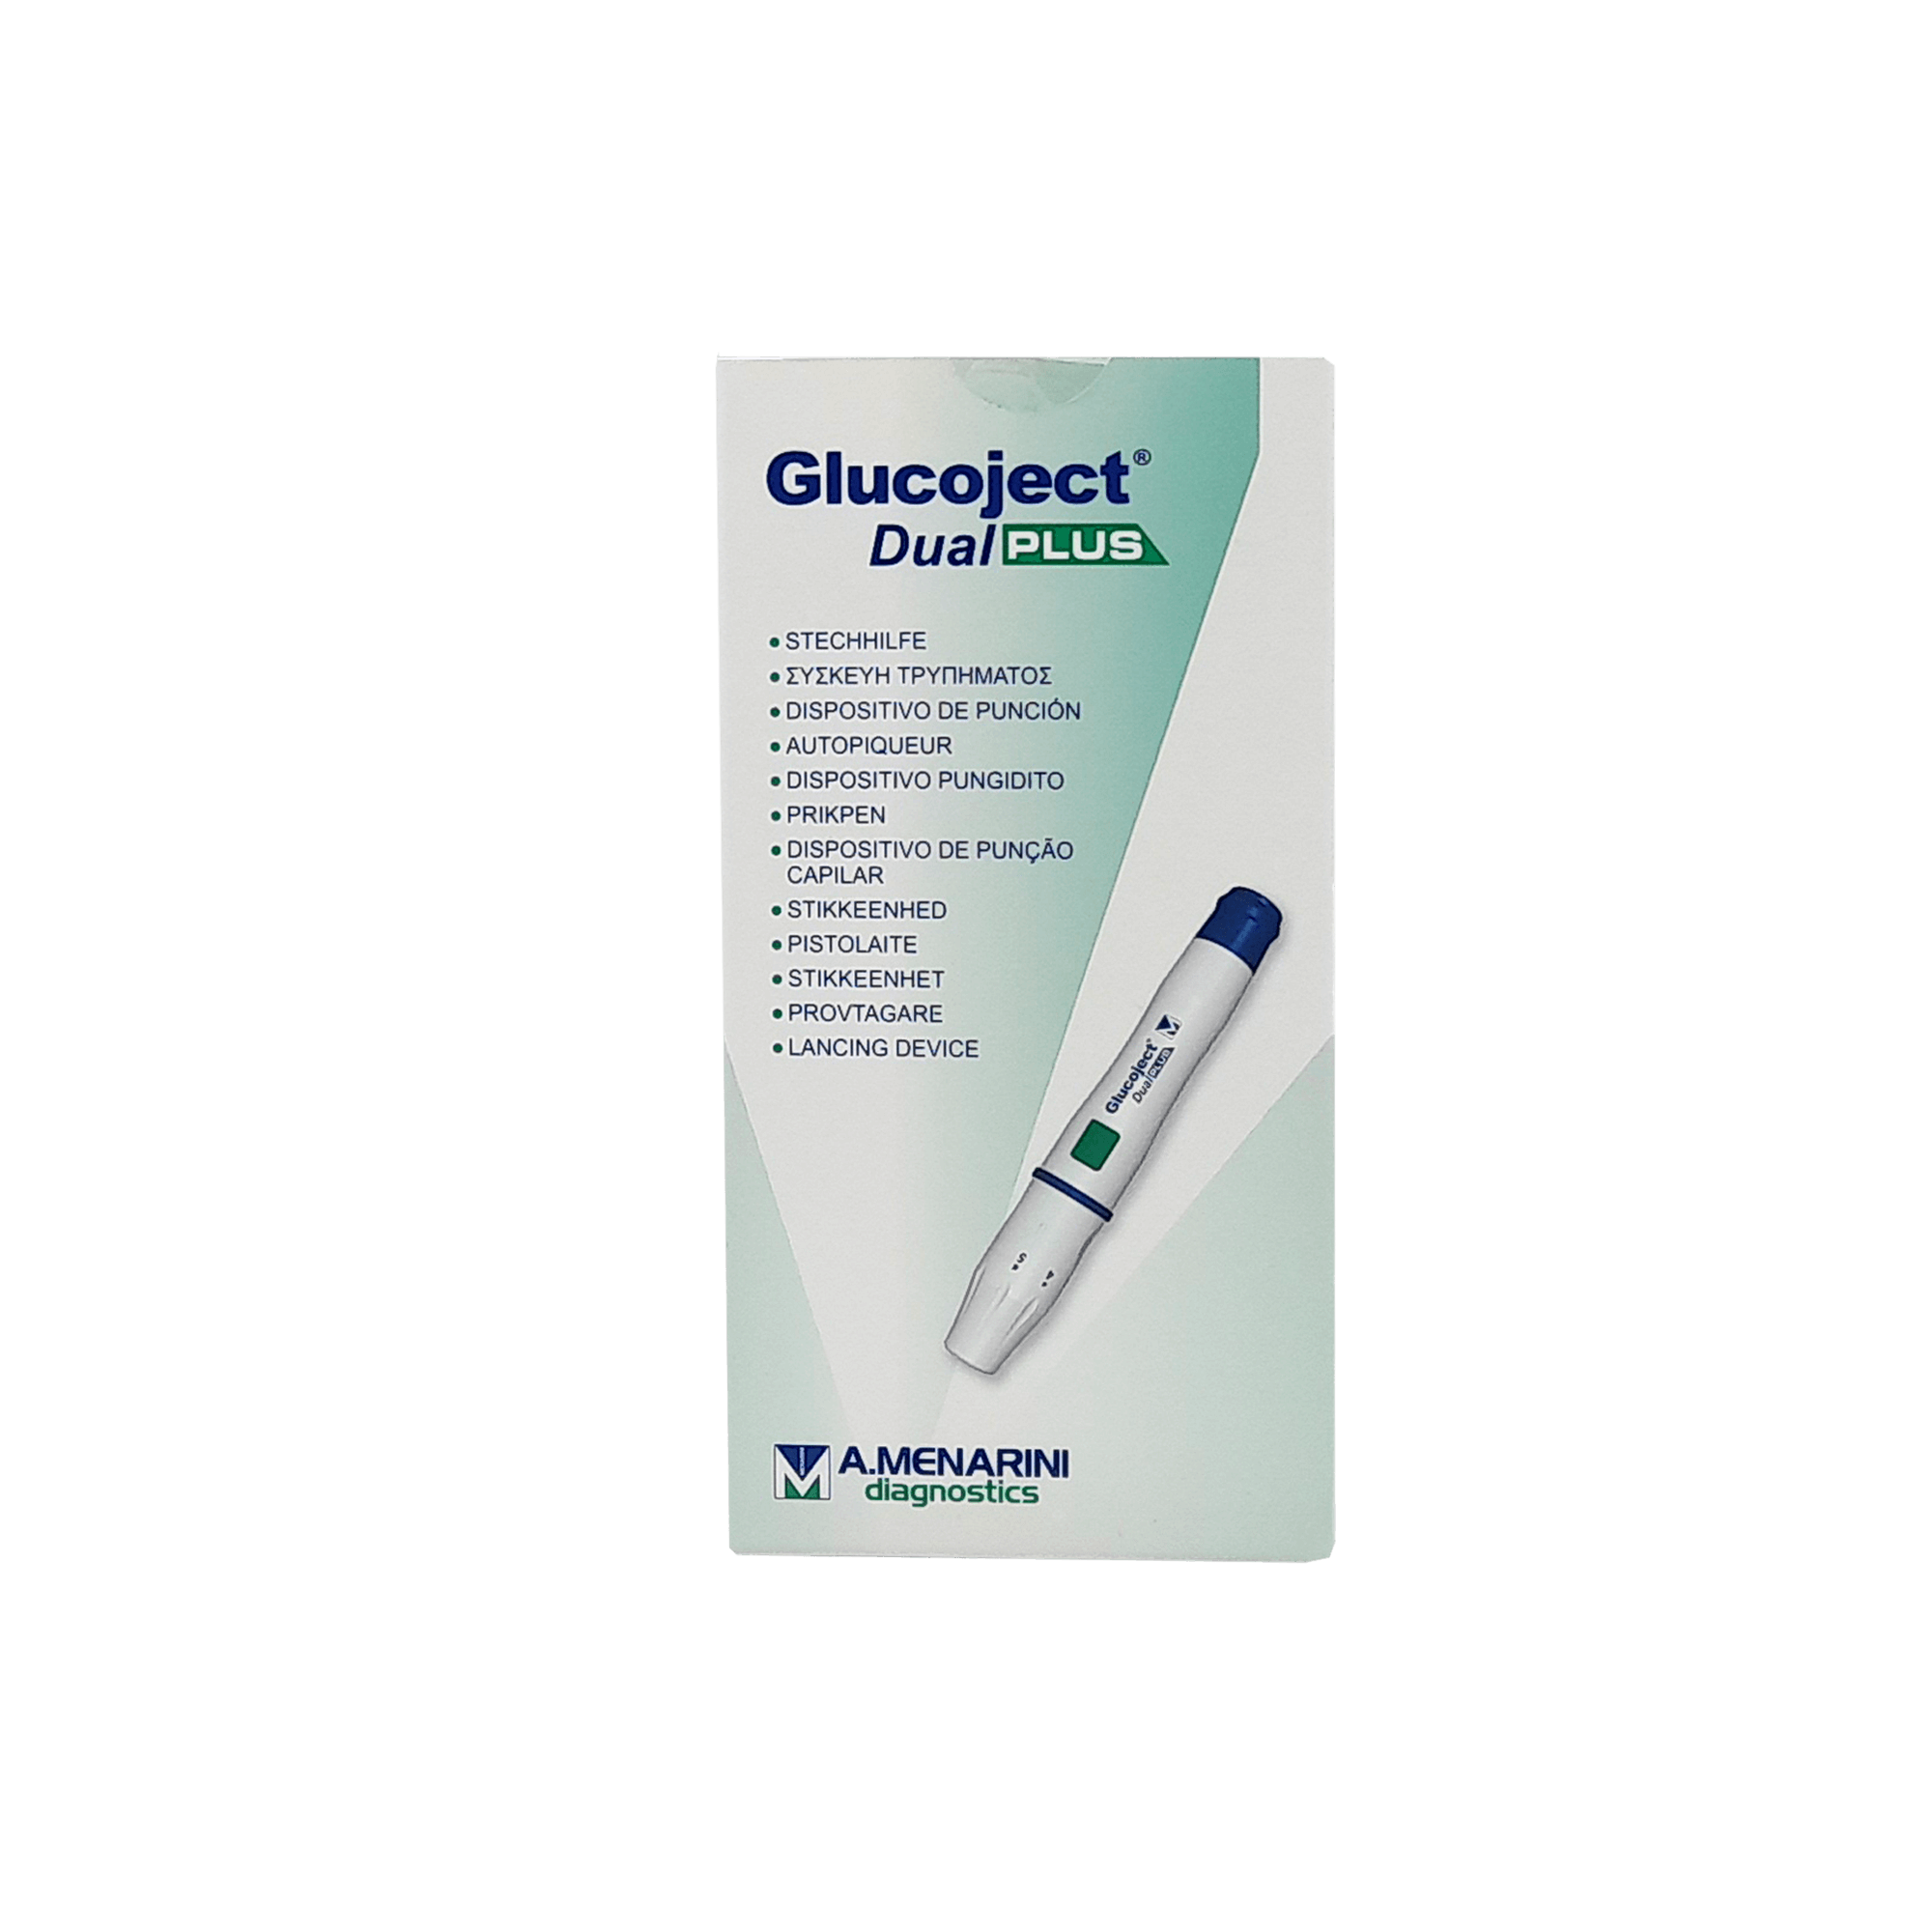 Glucoject Dual PLUS Stechhilfe 